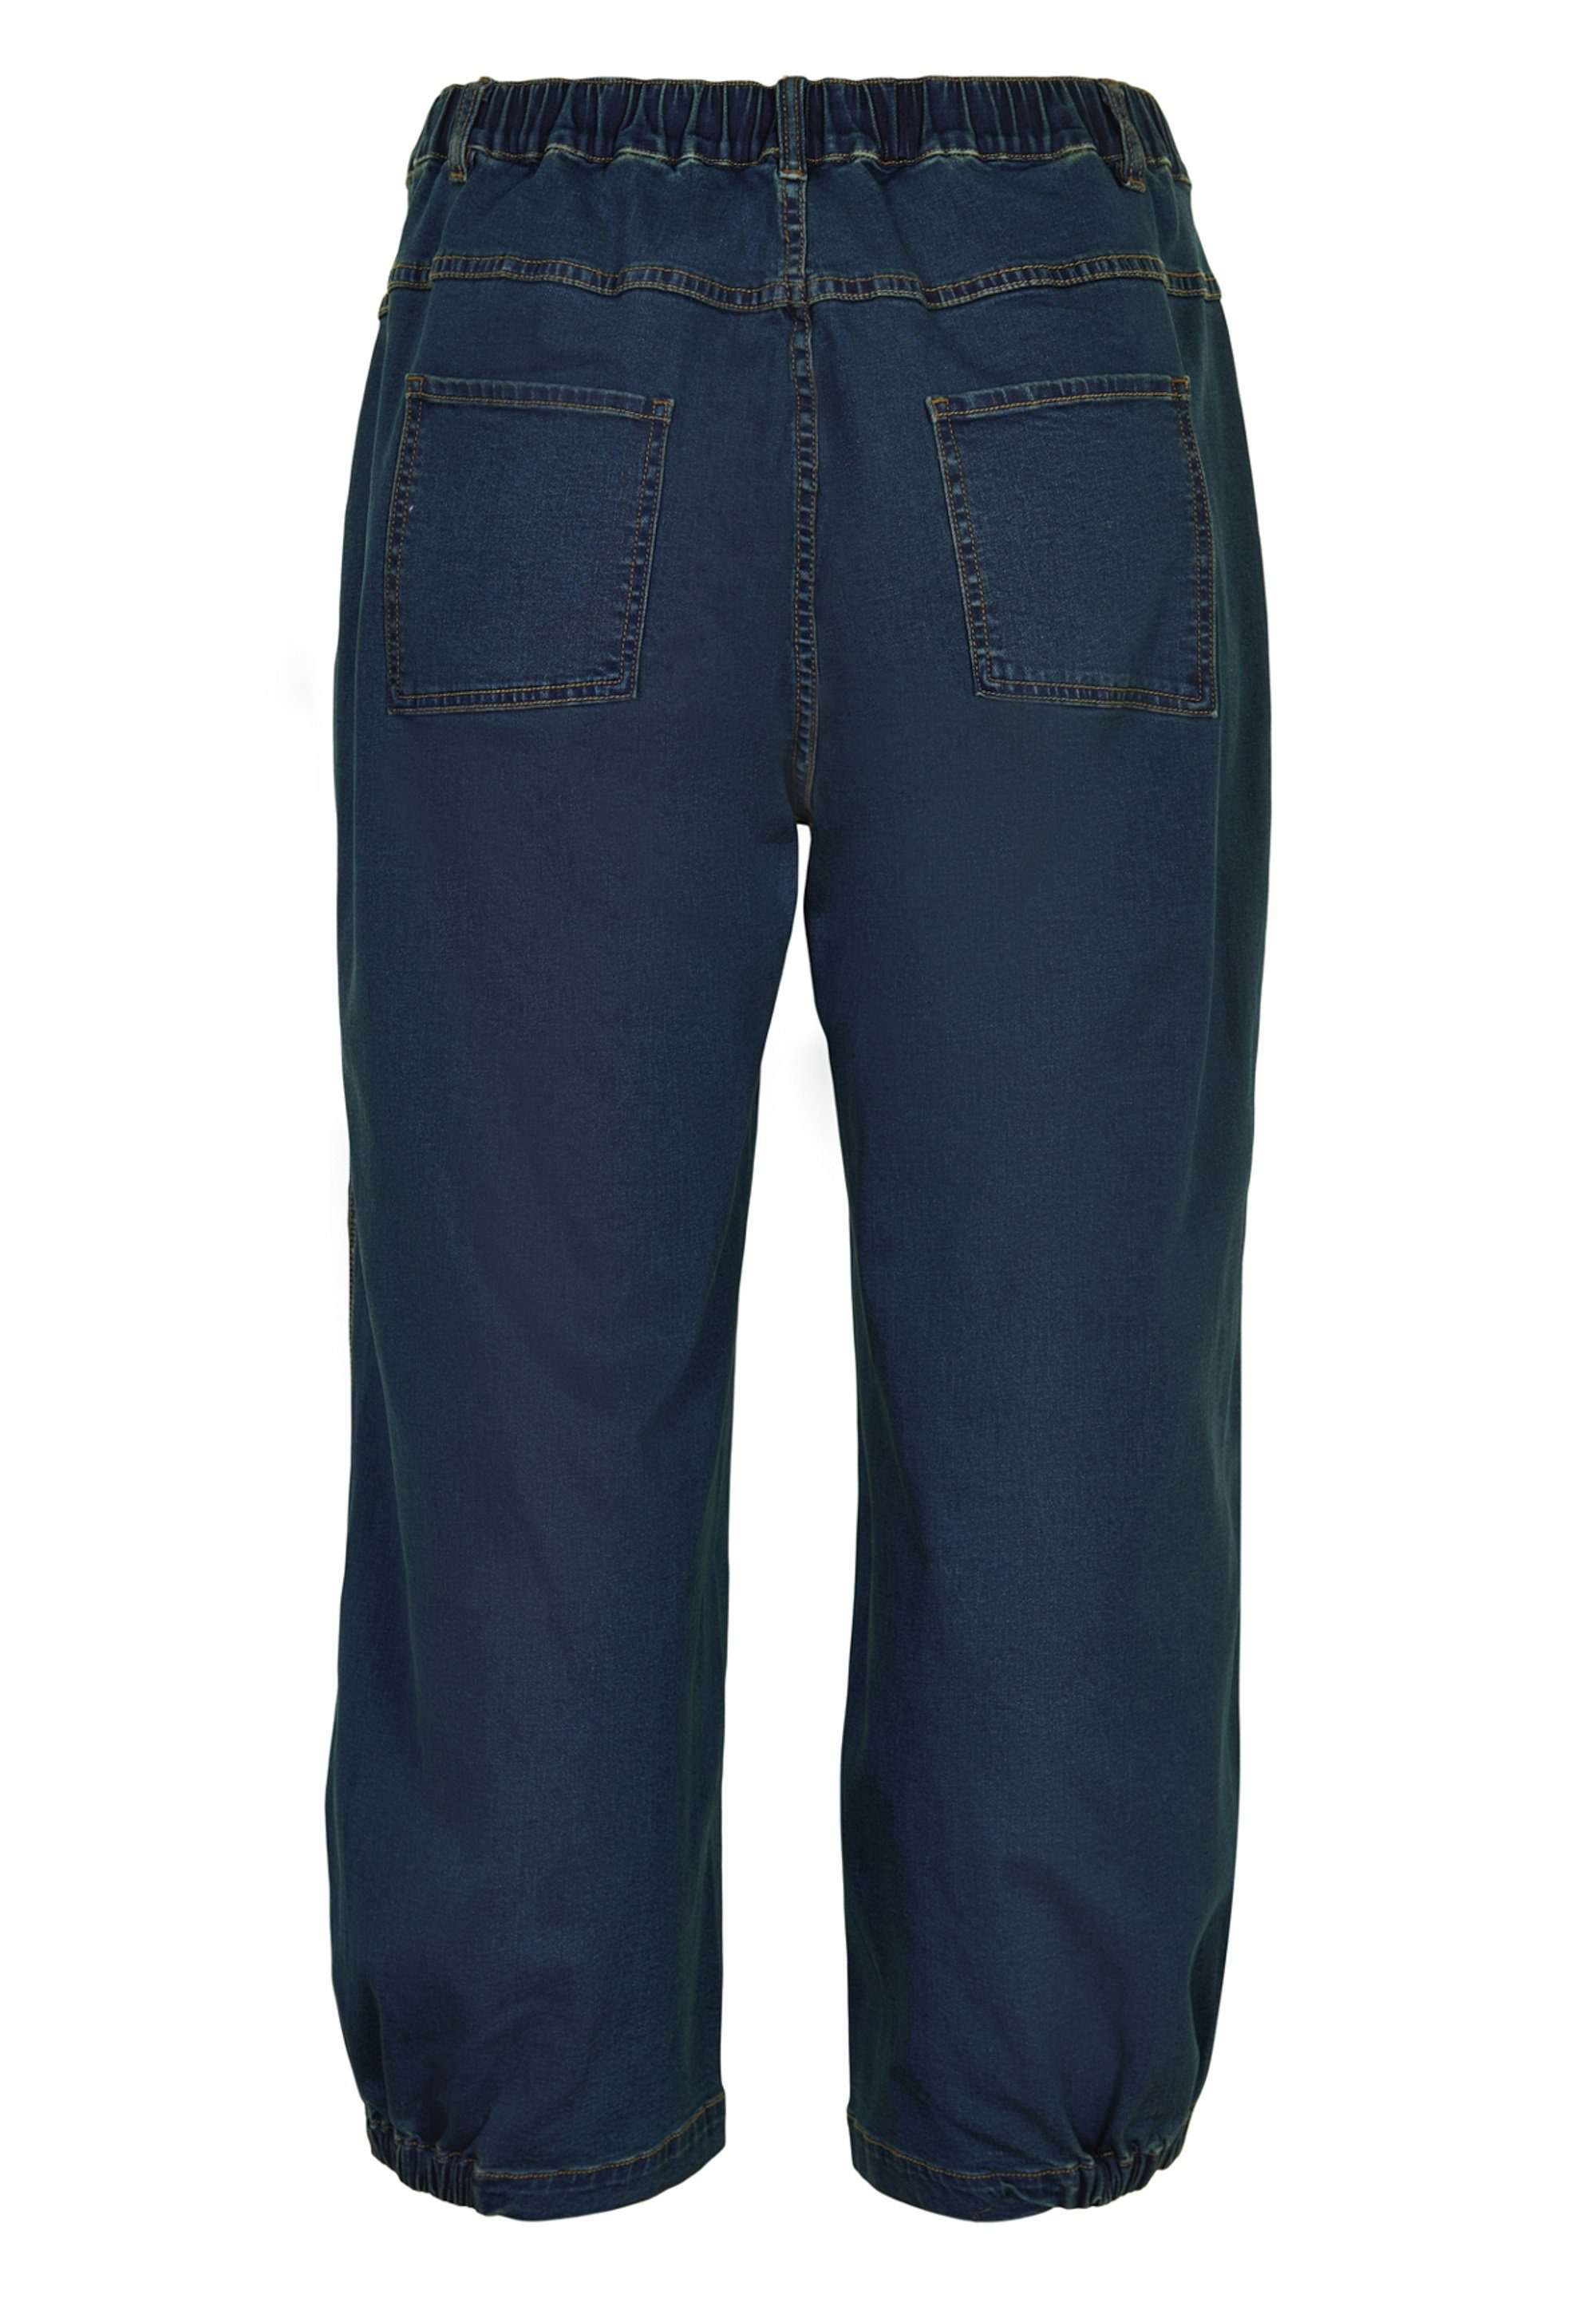 GOZZIP 3/4-Jeans Dark Clara Danish blue design denim